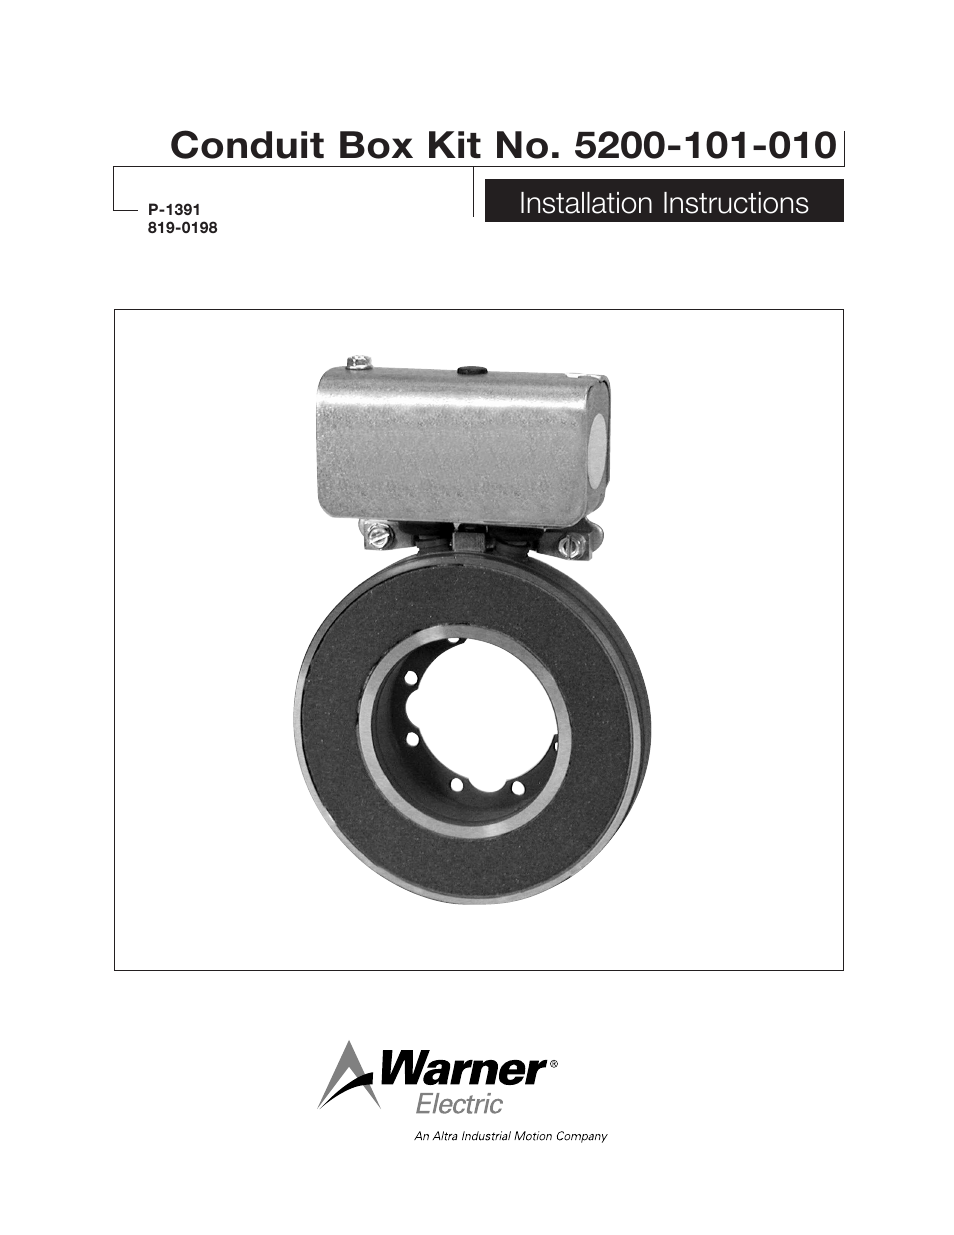 5200-101-010 Conduit Box Kit